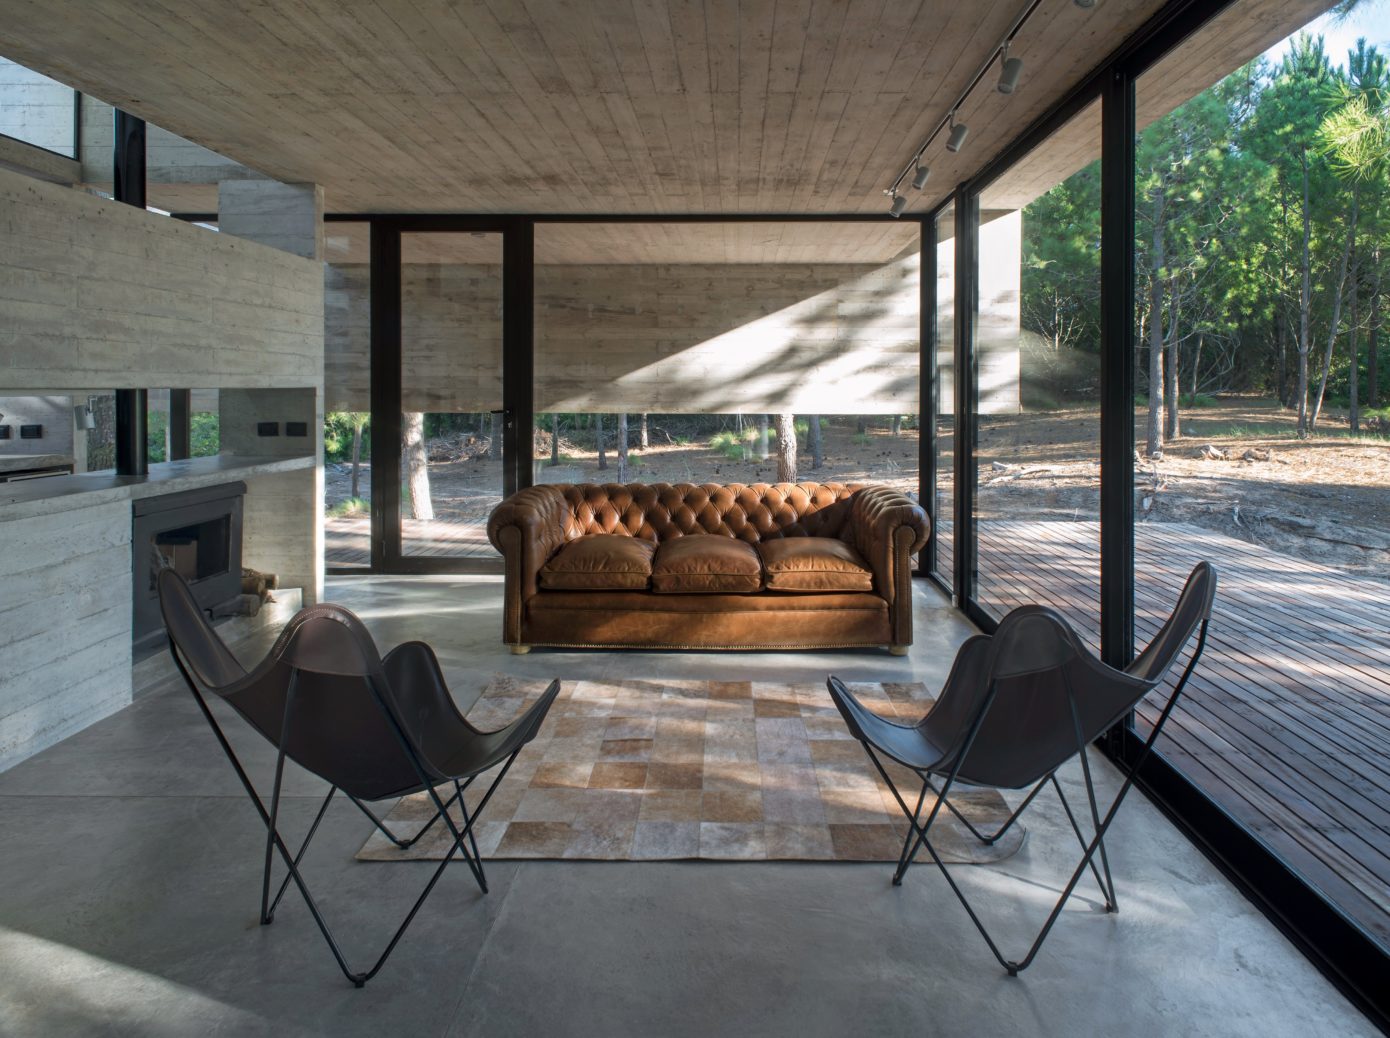 Casa SJ by Luciano Kruk Arquitectos